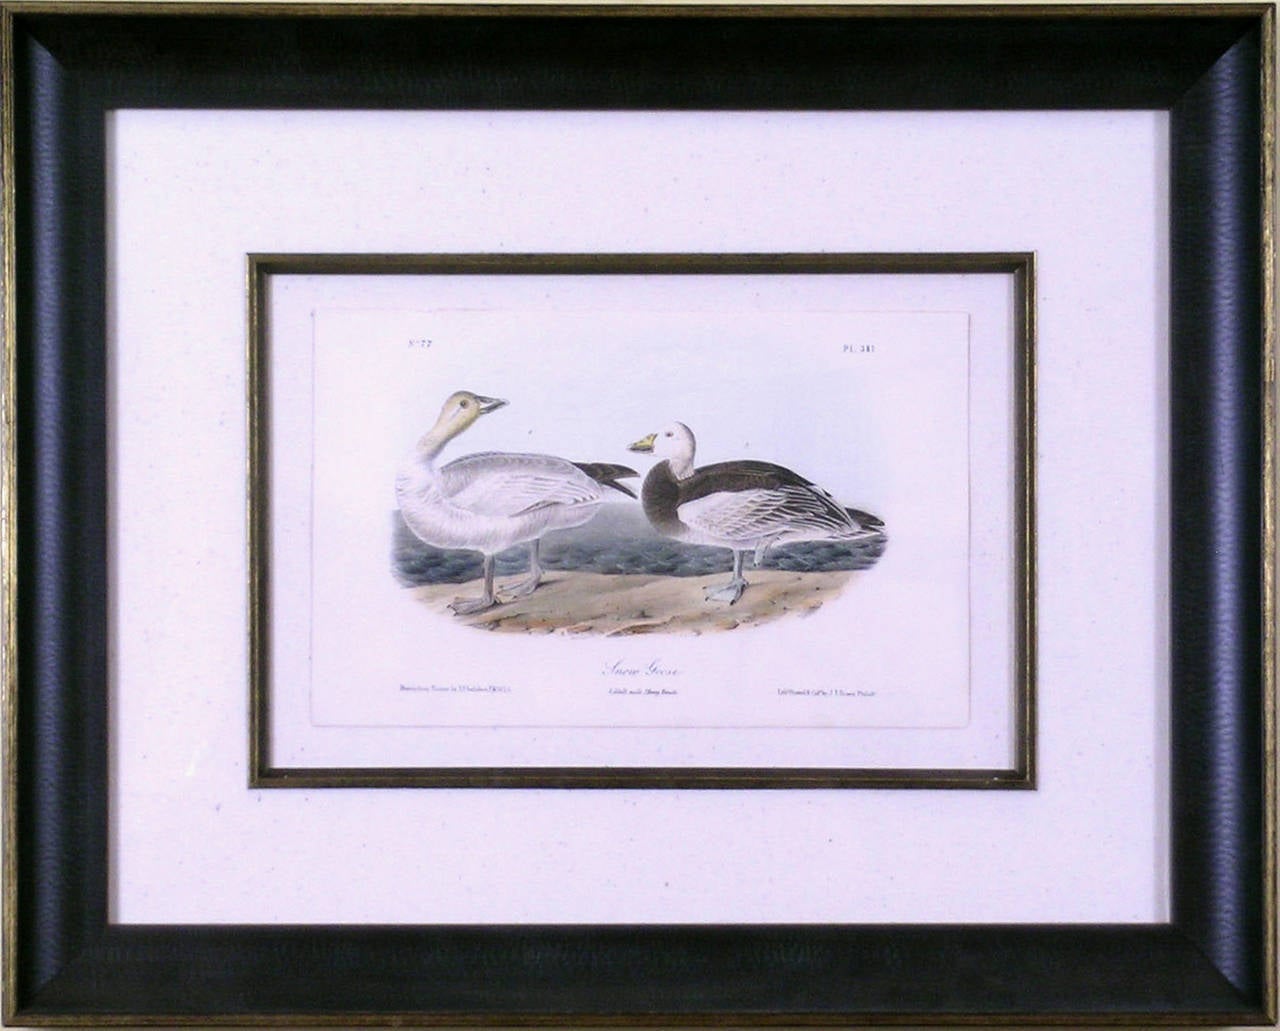 Snow Goose - Print by John James Audubon